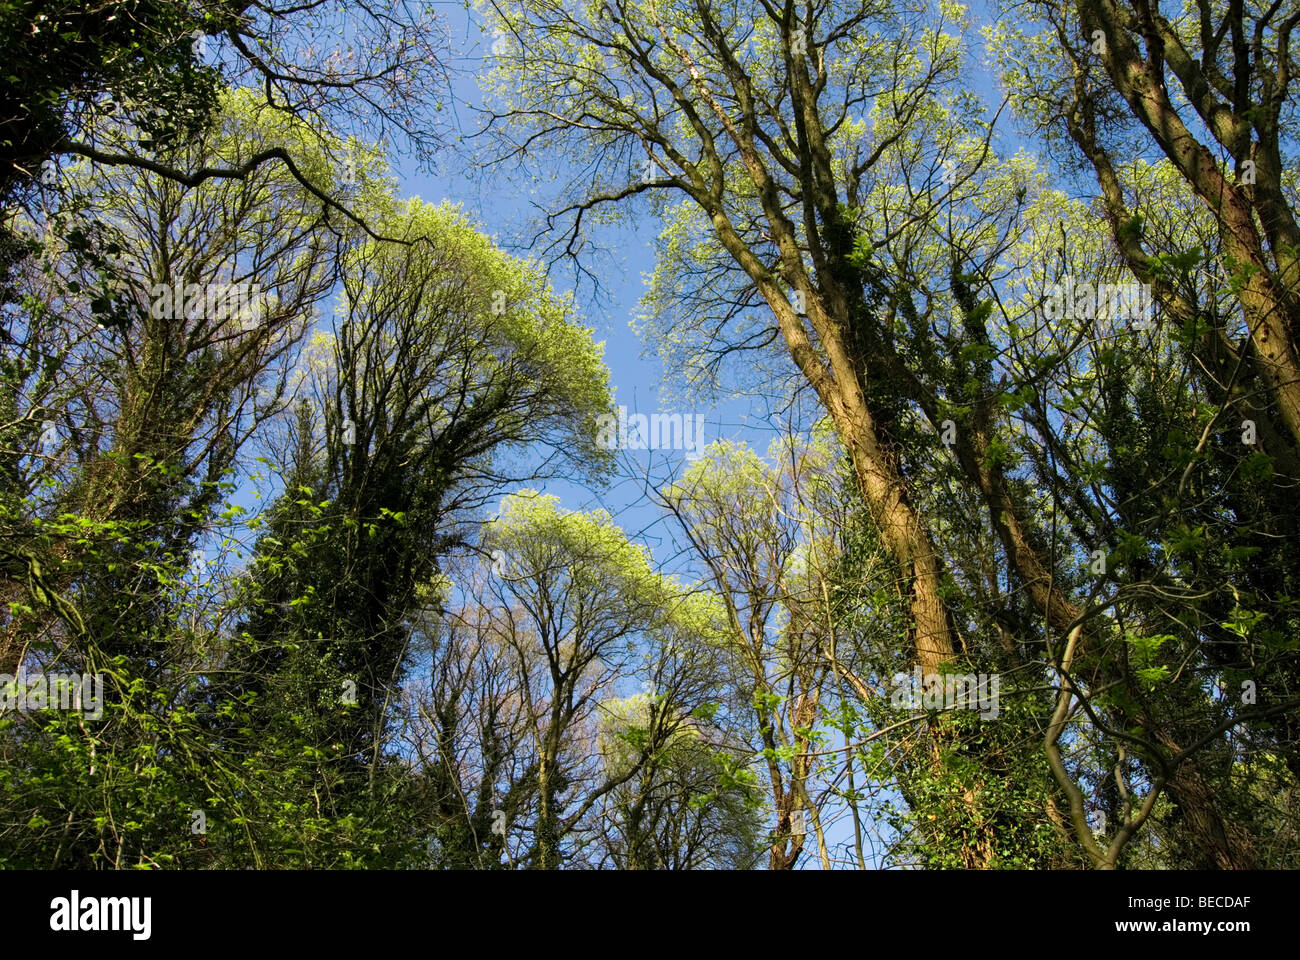 Wych elm trees (ulmus glabra) in seed Stock Photo